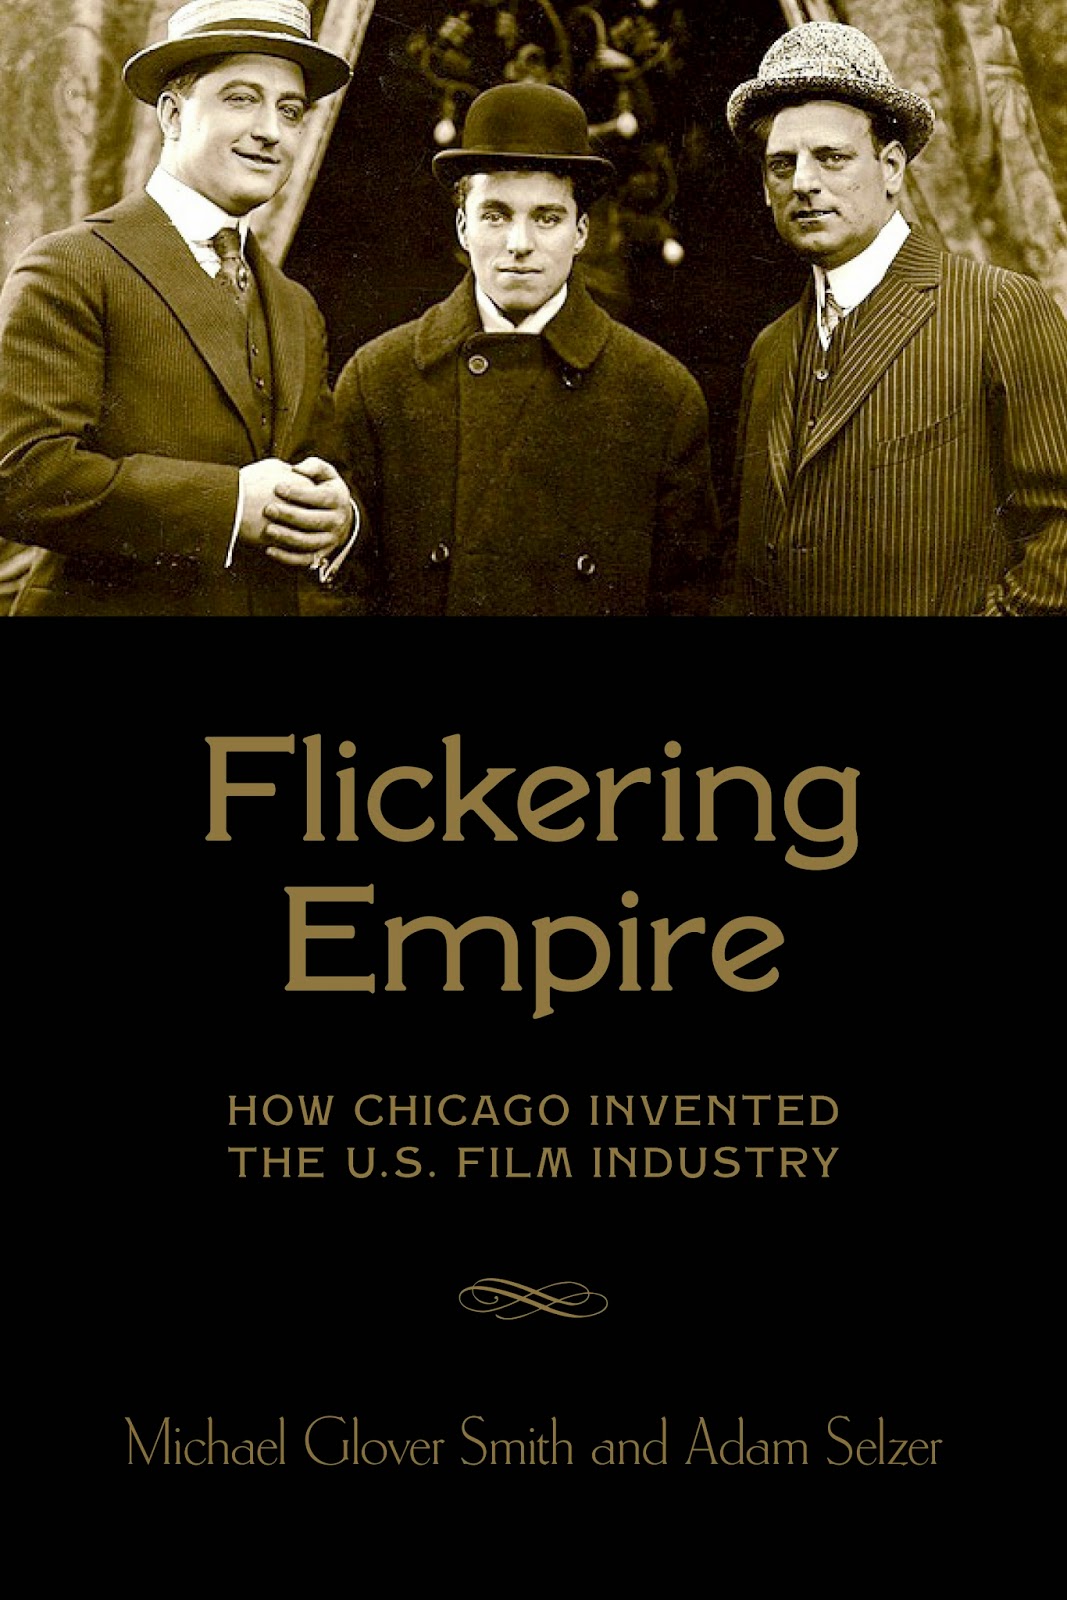 Flickering Empire